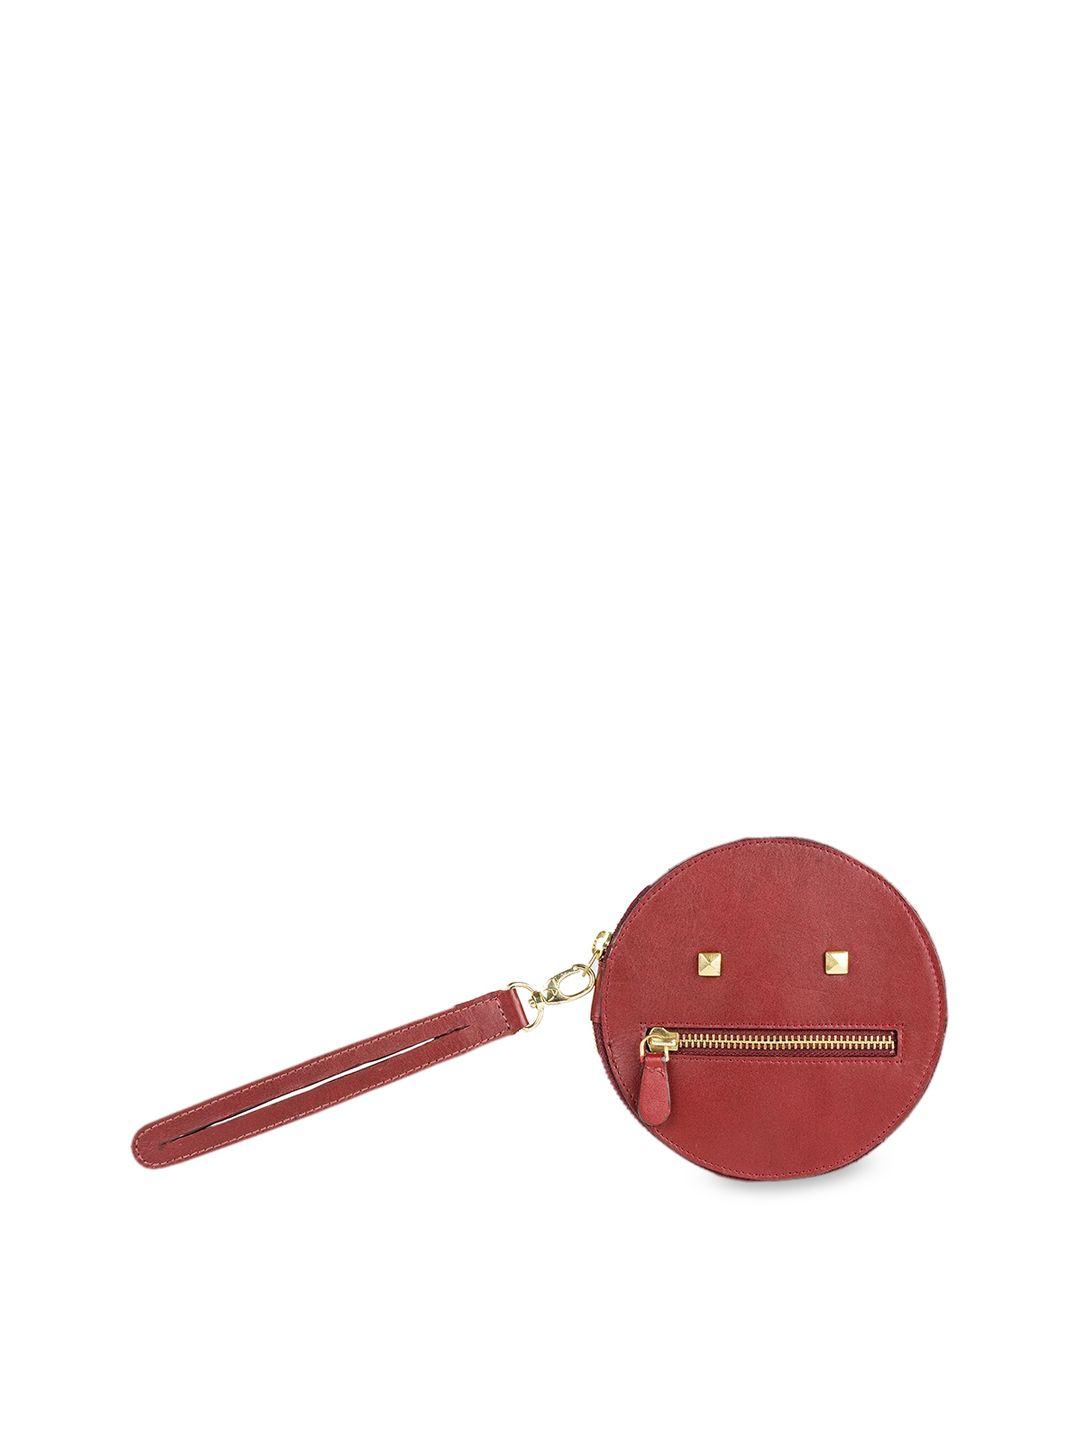 hidesign-red-circular-leather-purse-clutch